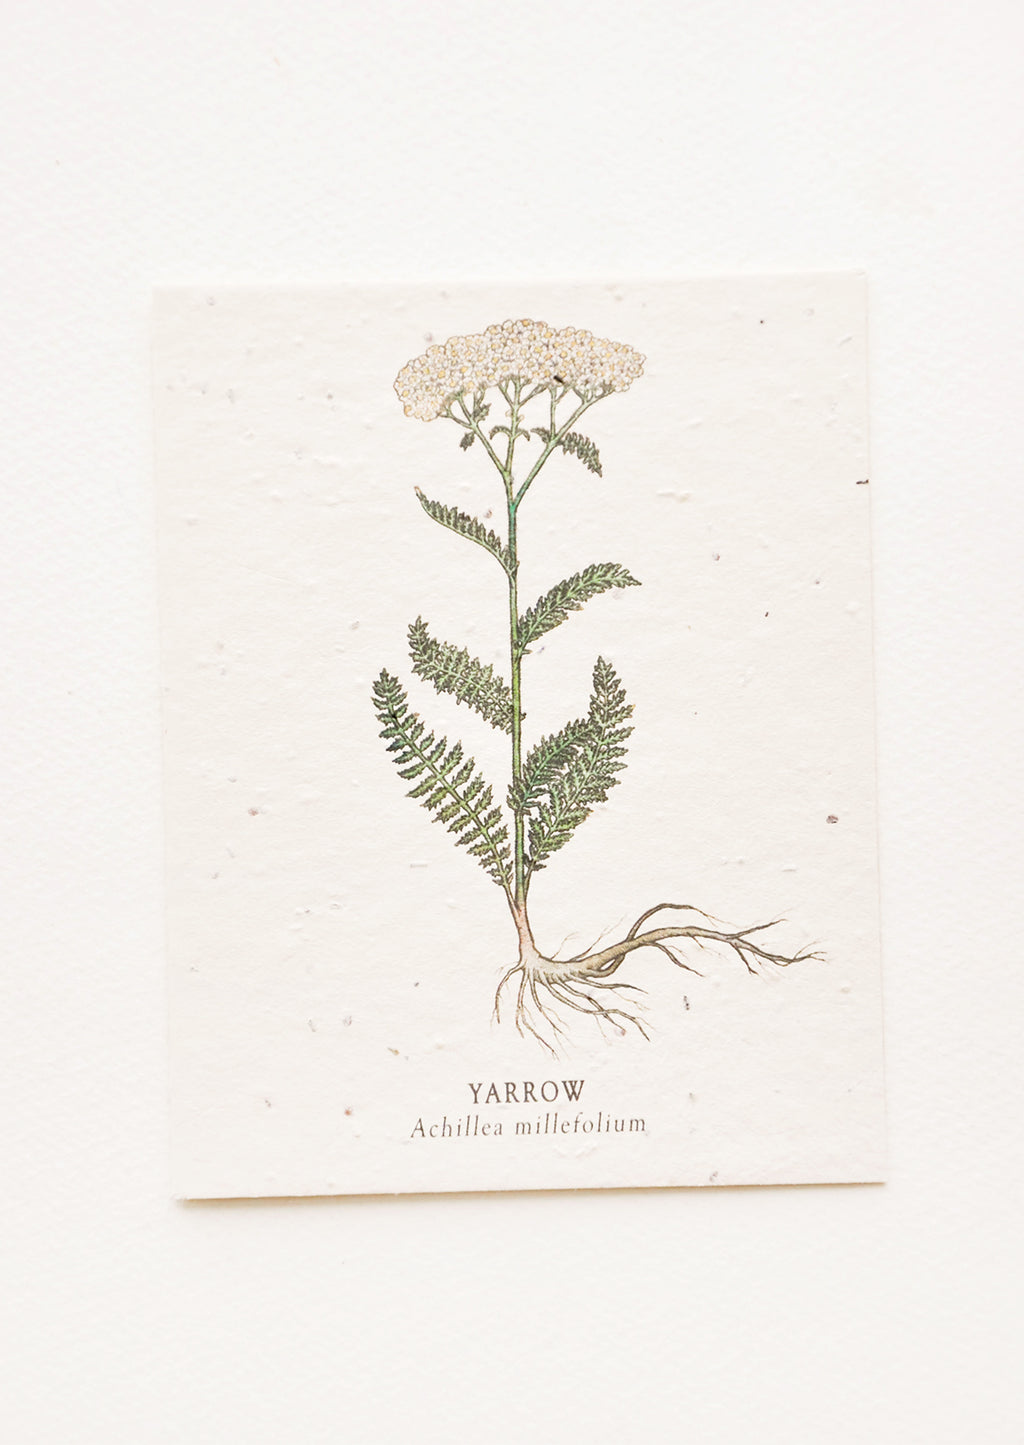 Yarrow: Notecard with drawing of a yarrow flower.